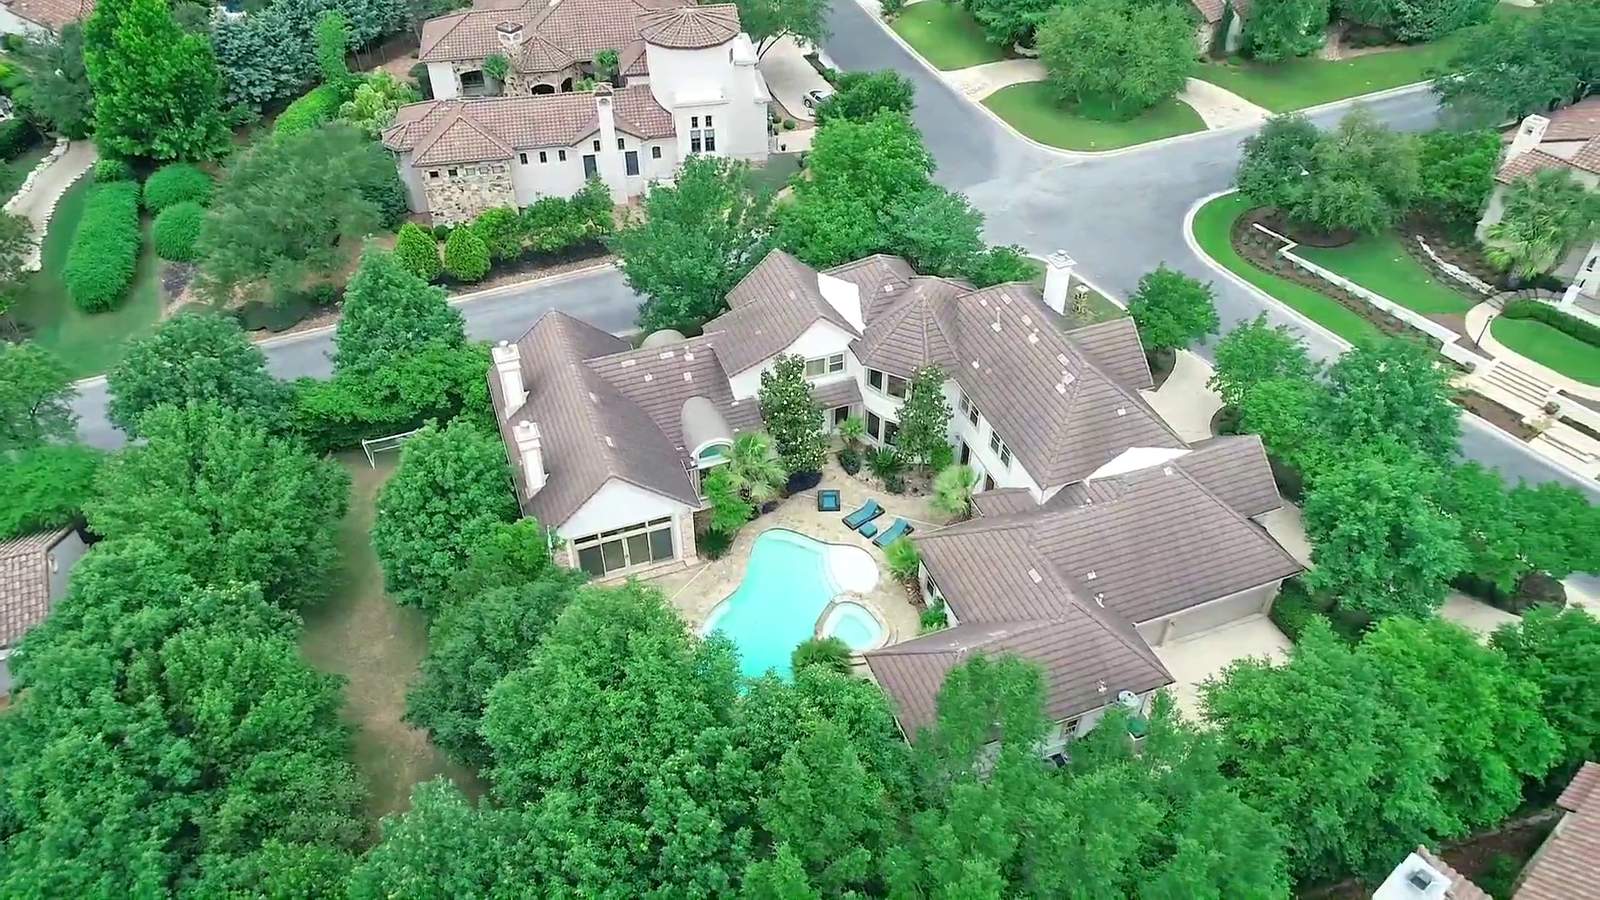 Take a tour of this $1.4 million French country style estate in San Antonio’s exclusive Dominion neighborhood